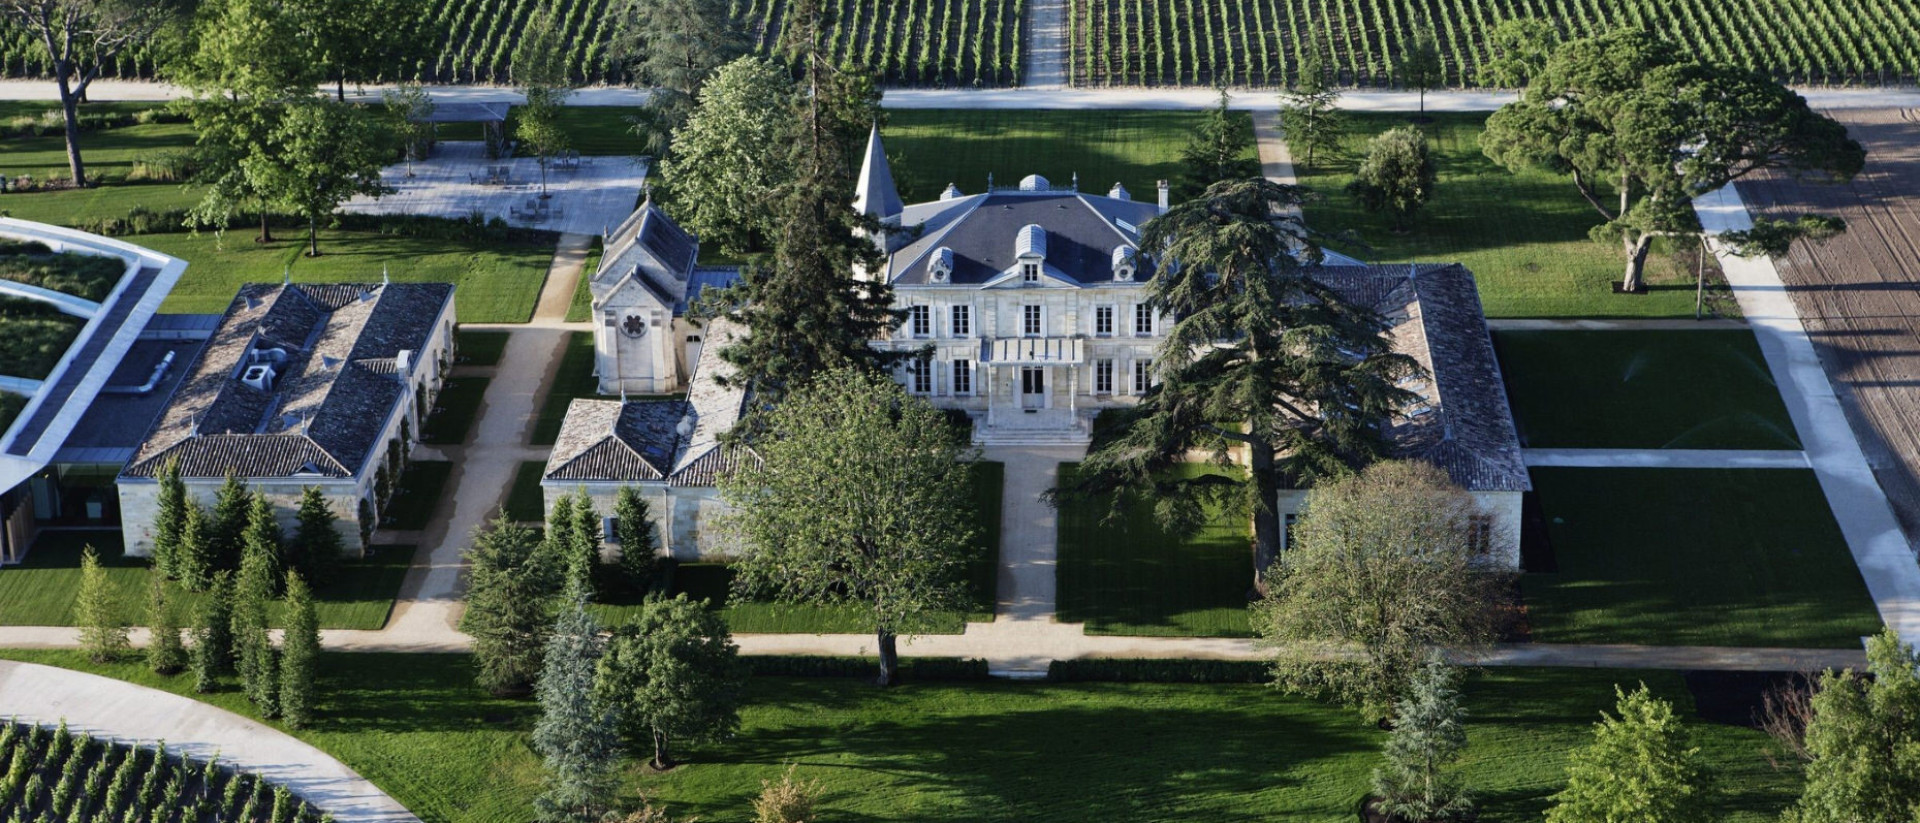 CHEVAL BLANC-Château CHEVAL BLANC 1950 - Clos des Millésimes - Rare wines  and great vintages